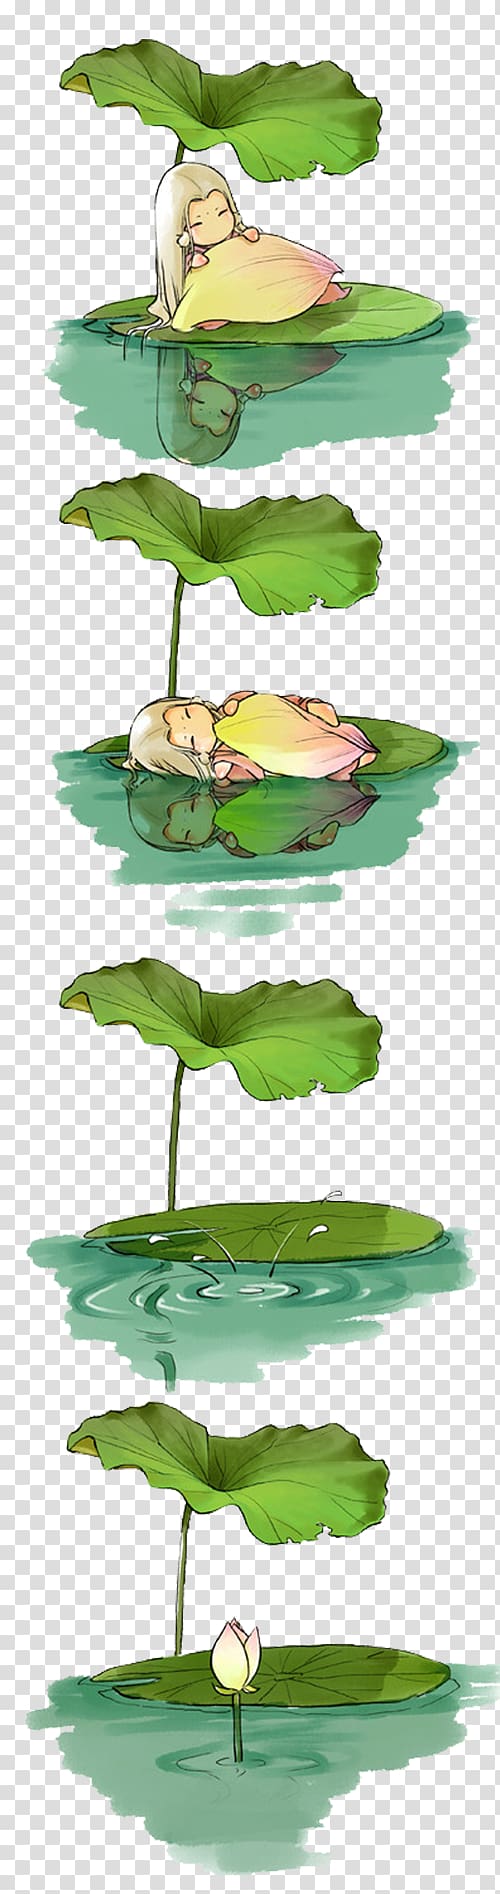 green vine plant illustration, Leaf Comics Illustration, Creative cartoon god cents lotus sleeping map transparent background PNG clipart